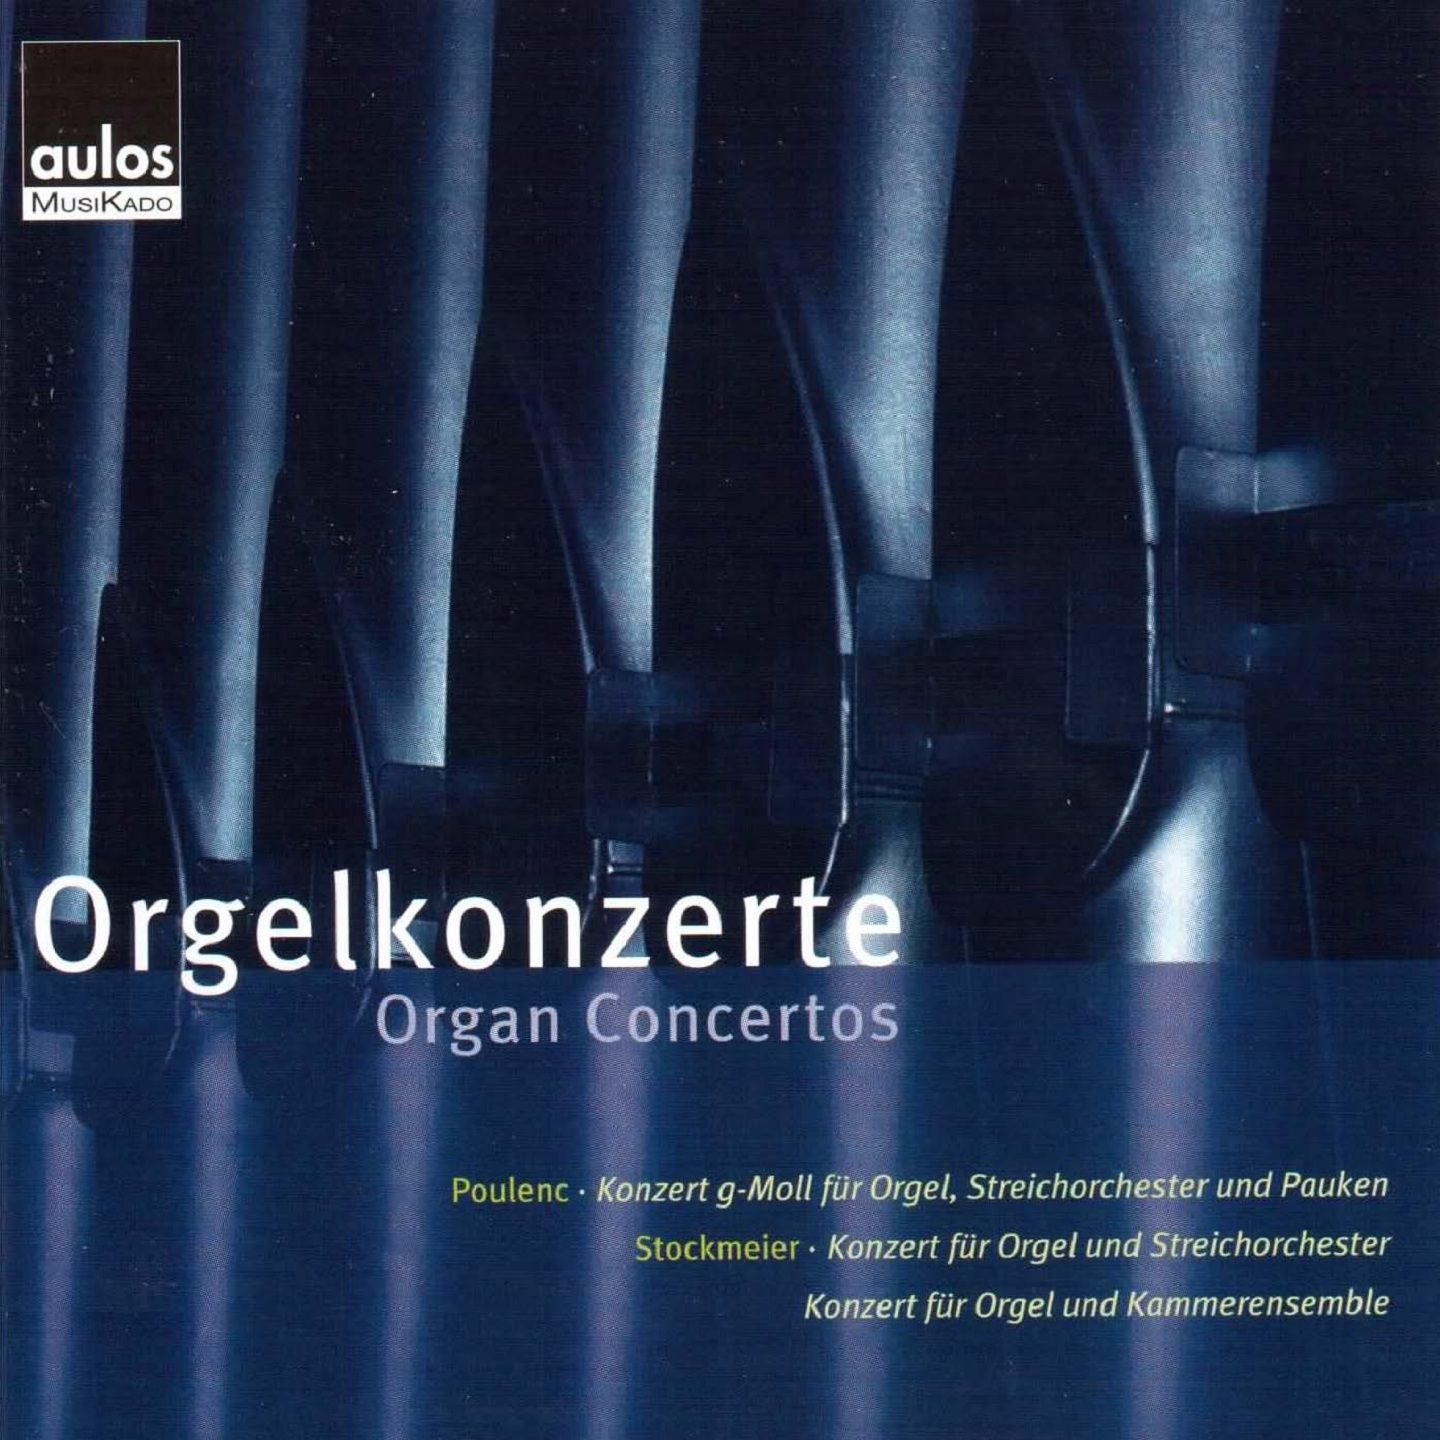 Konzert fü r Orgel, Streichorchester und Pauken in G Minor, FP 93: III. Tre s calme. Lent  Tempo de l' allegro initial  Tempo introduction. Largo